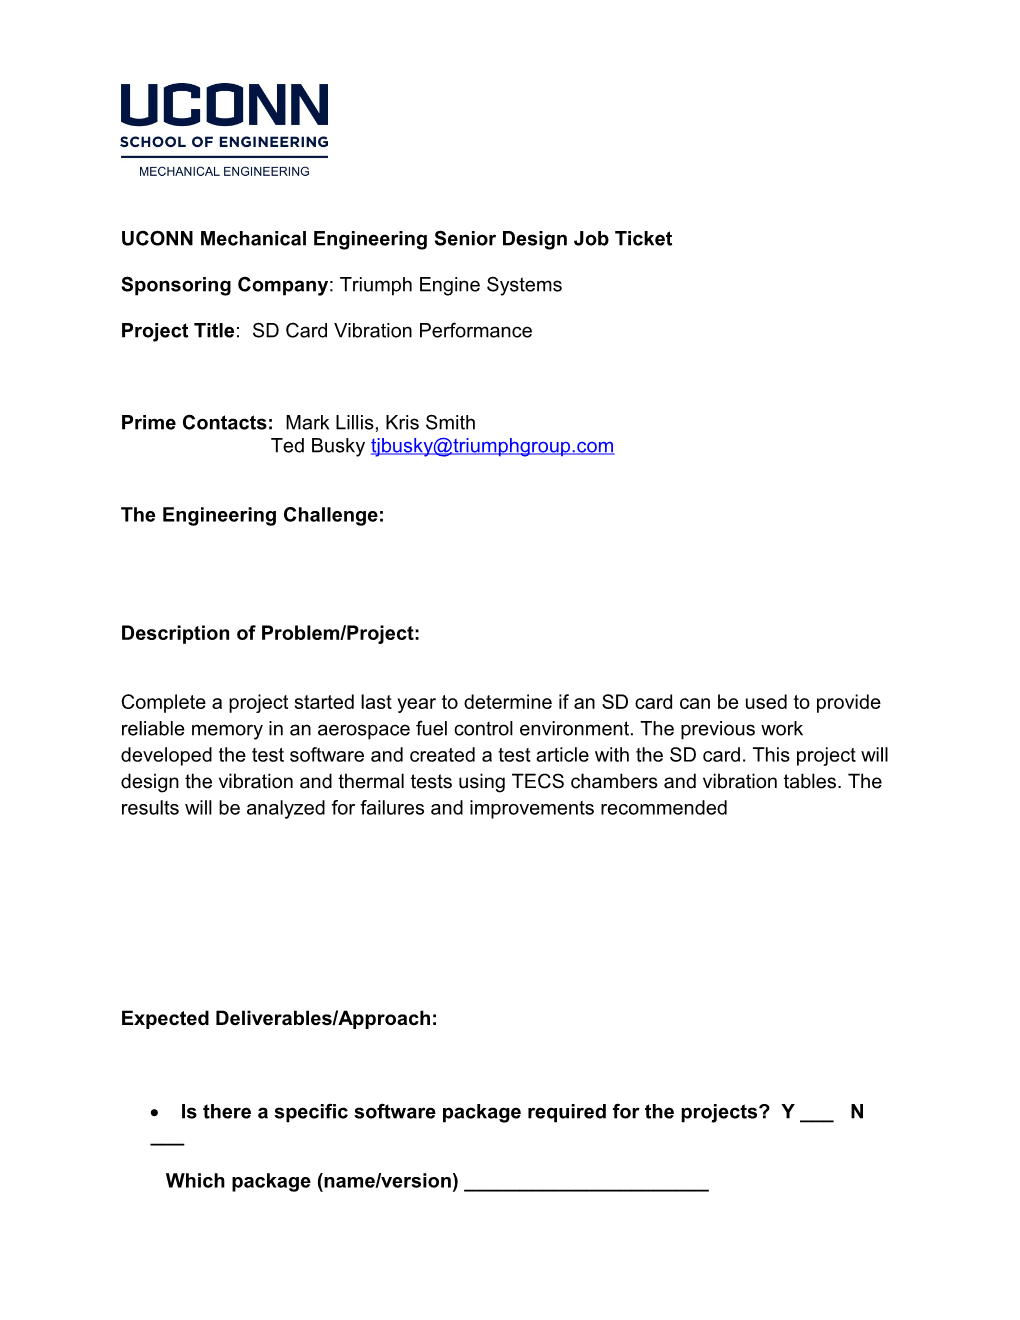 UCONN Mechanical Engineering Senior Design Job Ticket s1